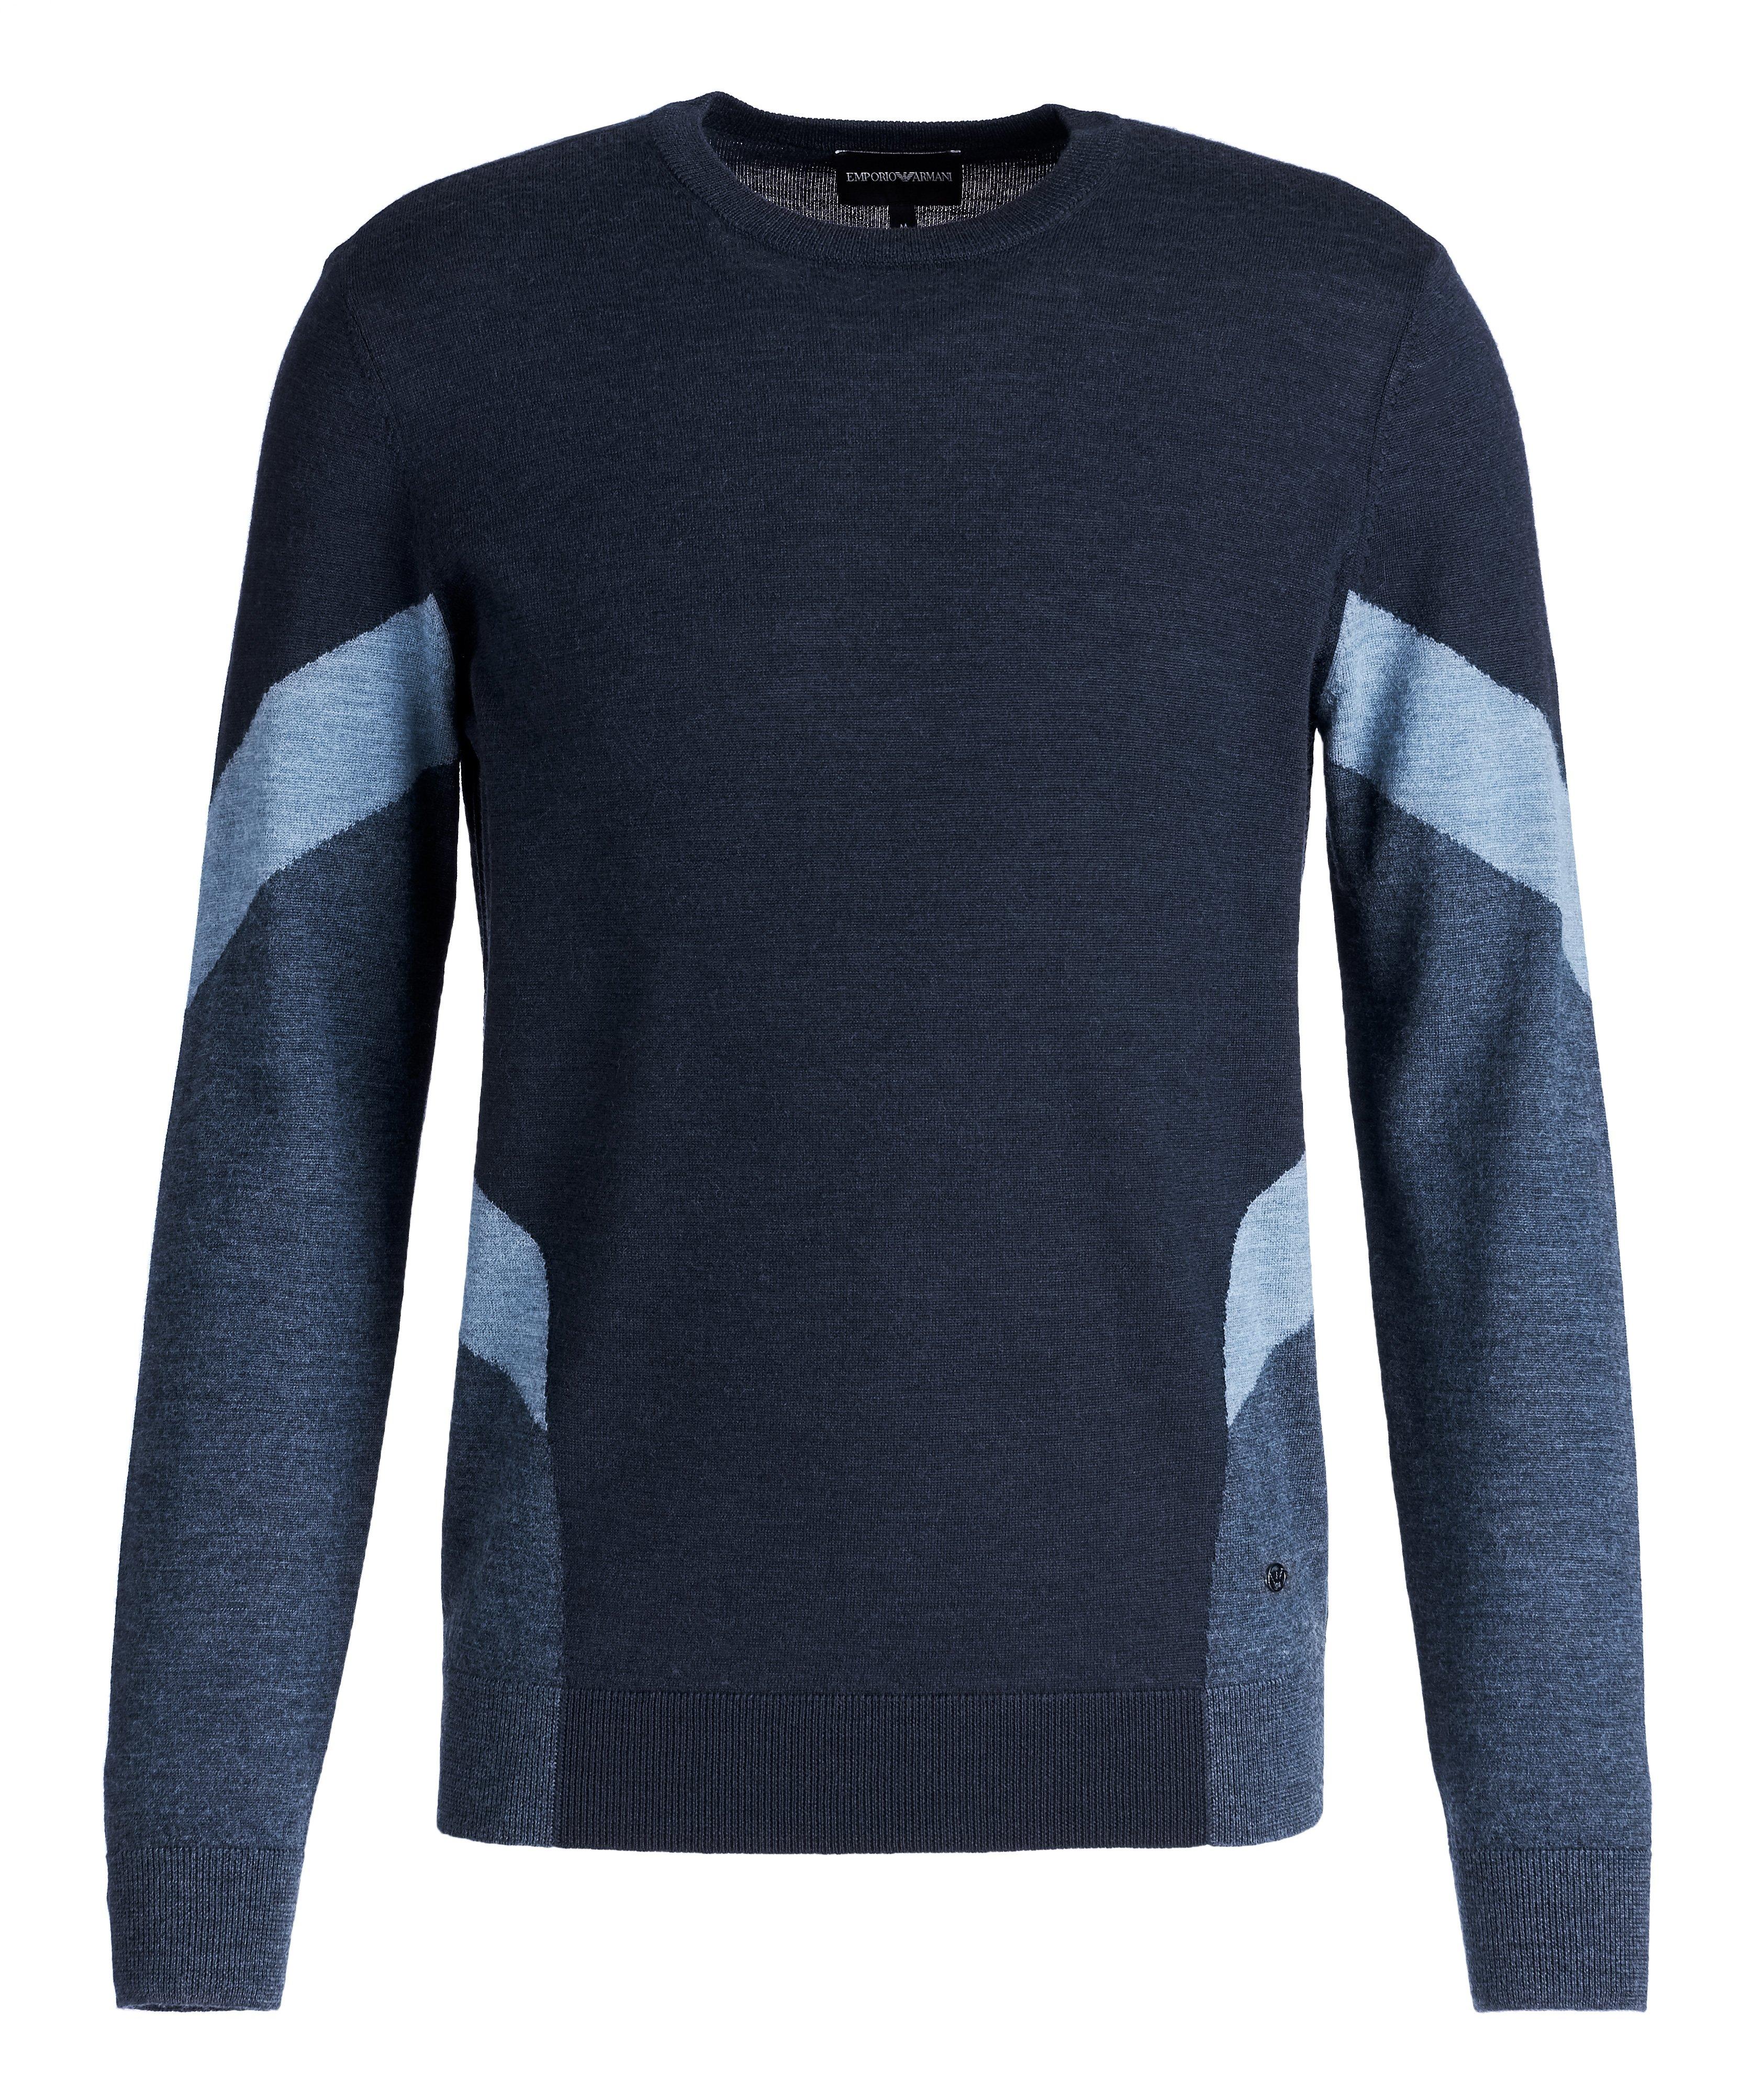 Colourblocked Wool Sweater image 0